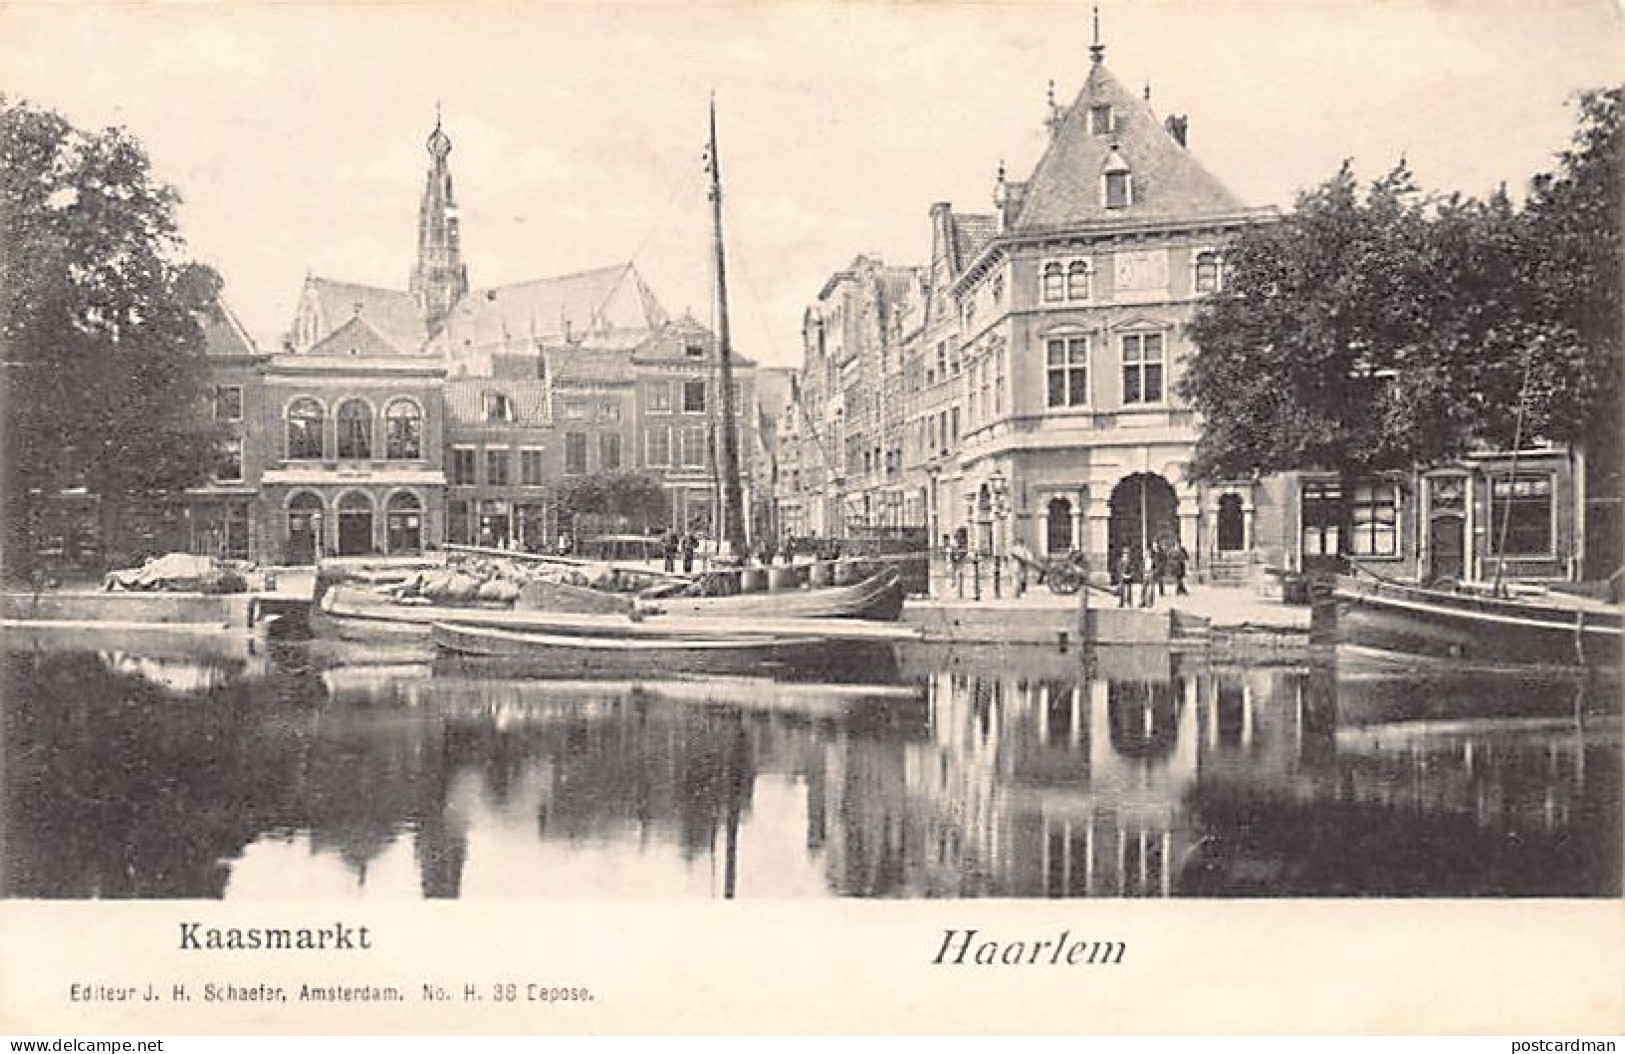 HAARLEM (NH) Kaasmarkt - Uitg. J.H. Schaefer H. 38 - Haarlem